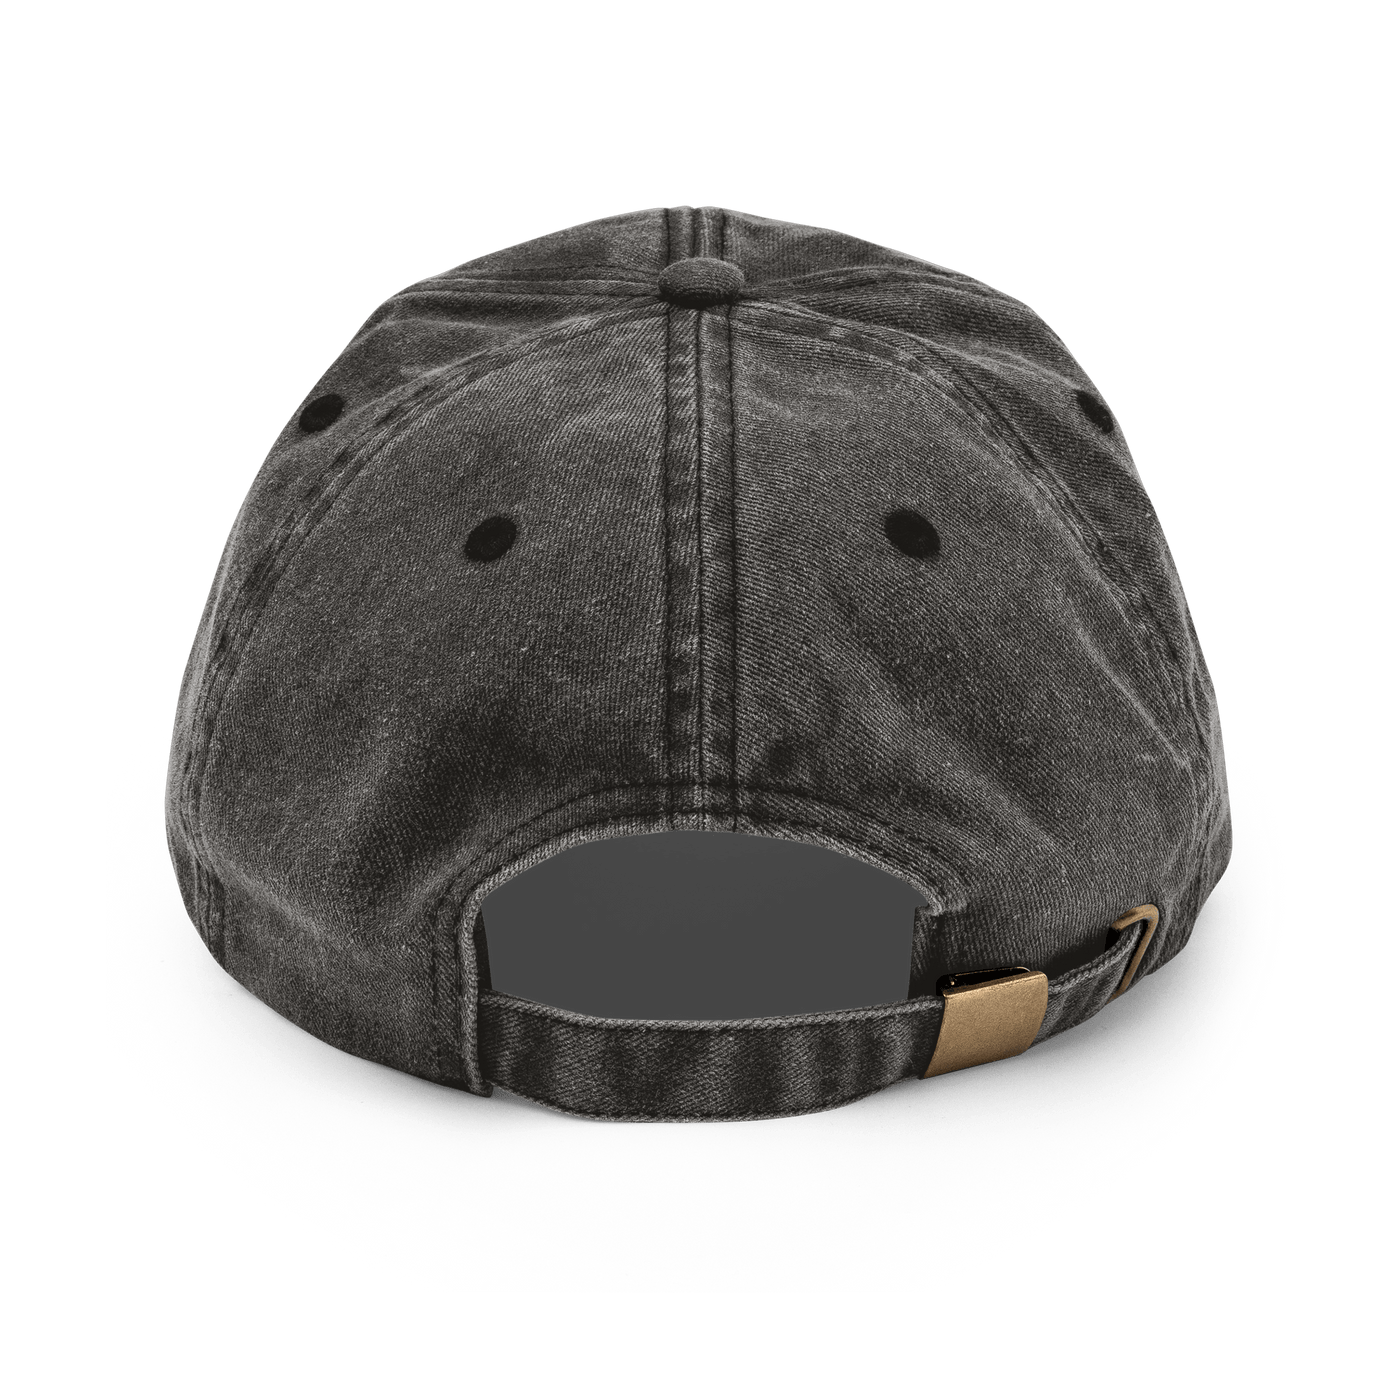 FIKA Vintage Hat - Vintage Black - - Just Another Cap Store